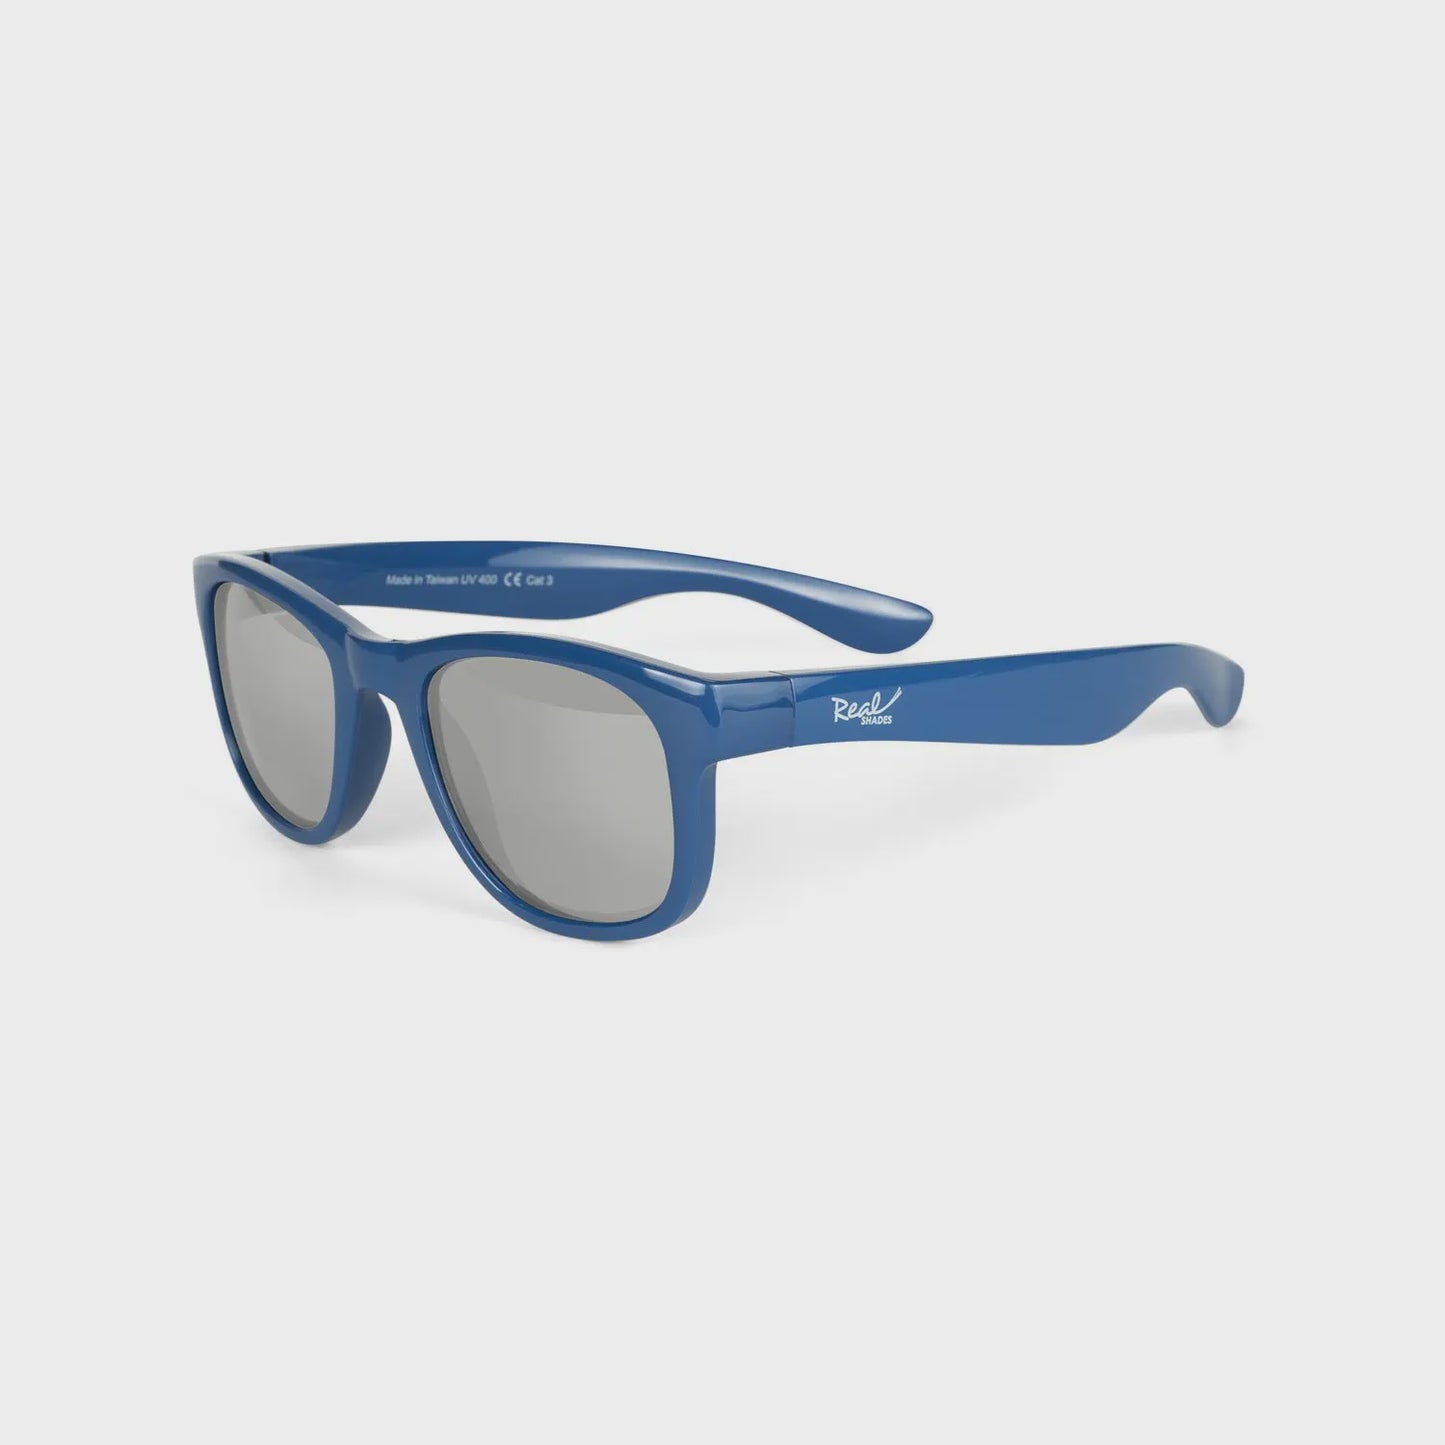 Dusty Blue Surf Sunglasses 4+